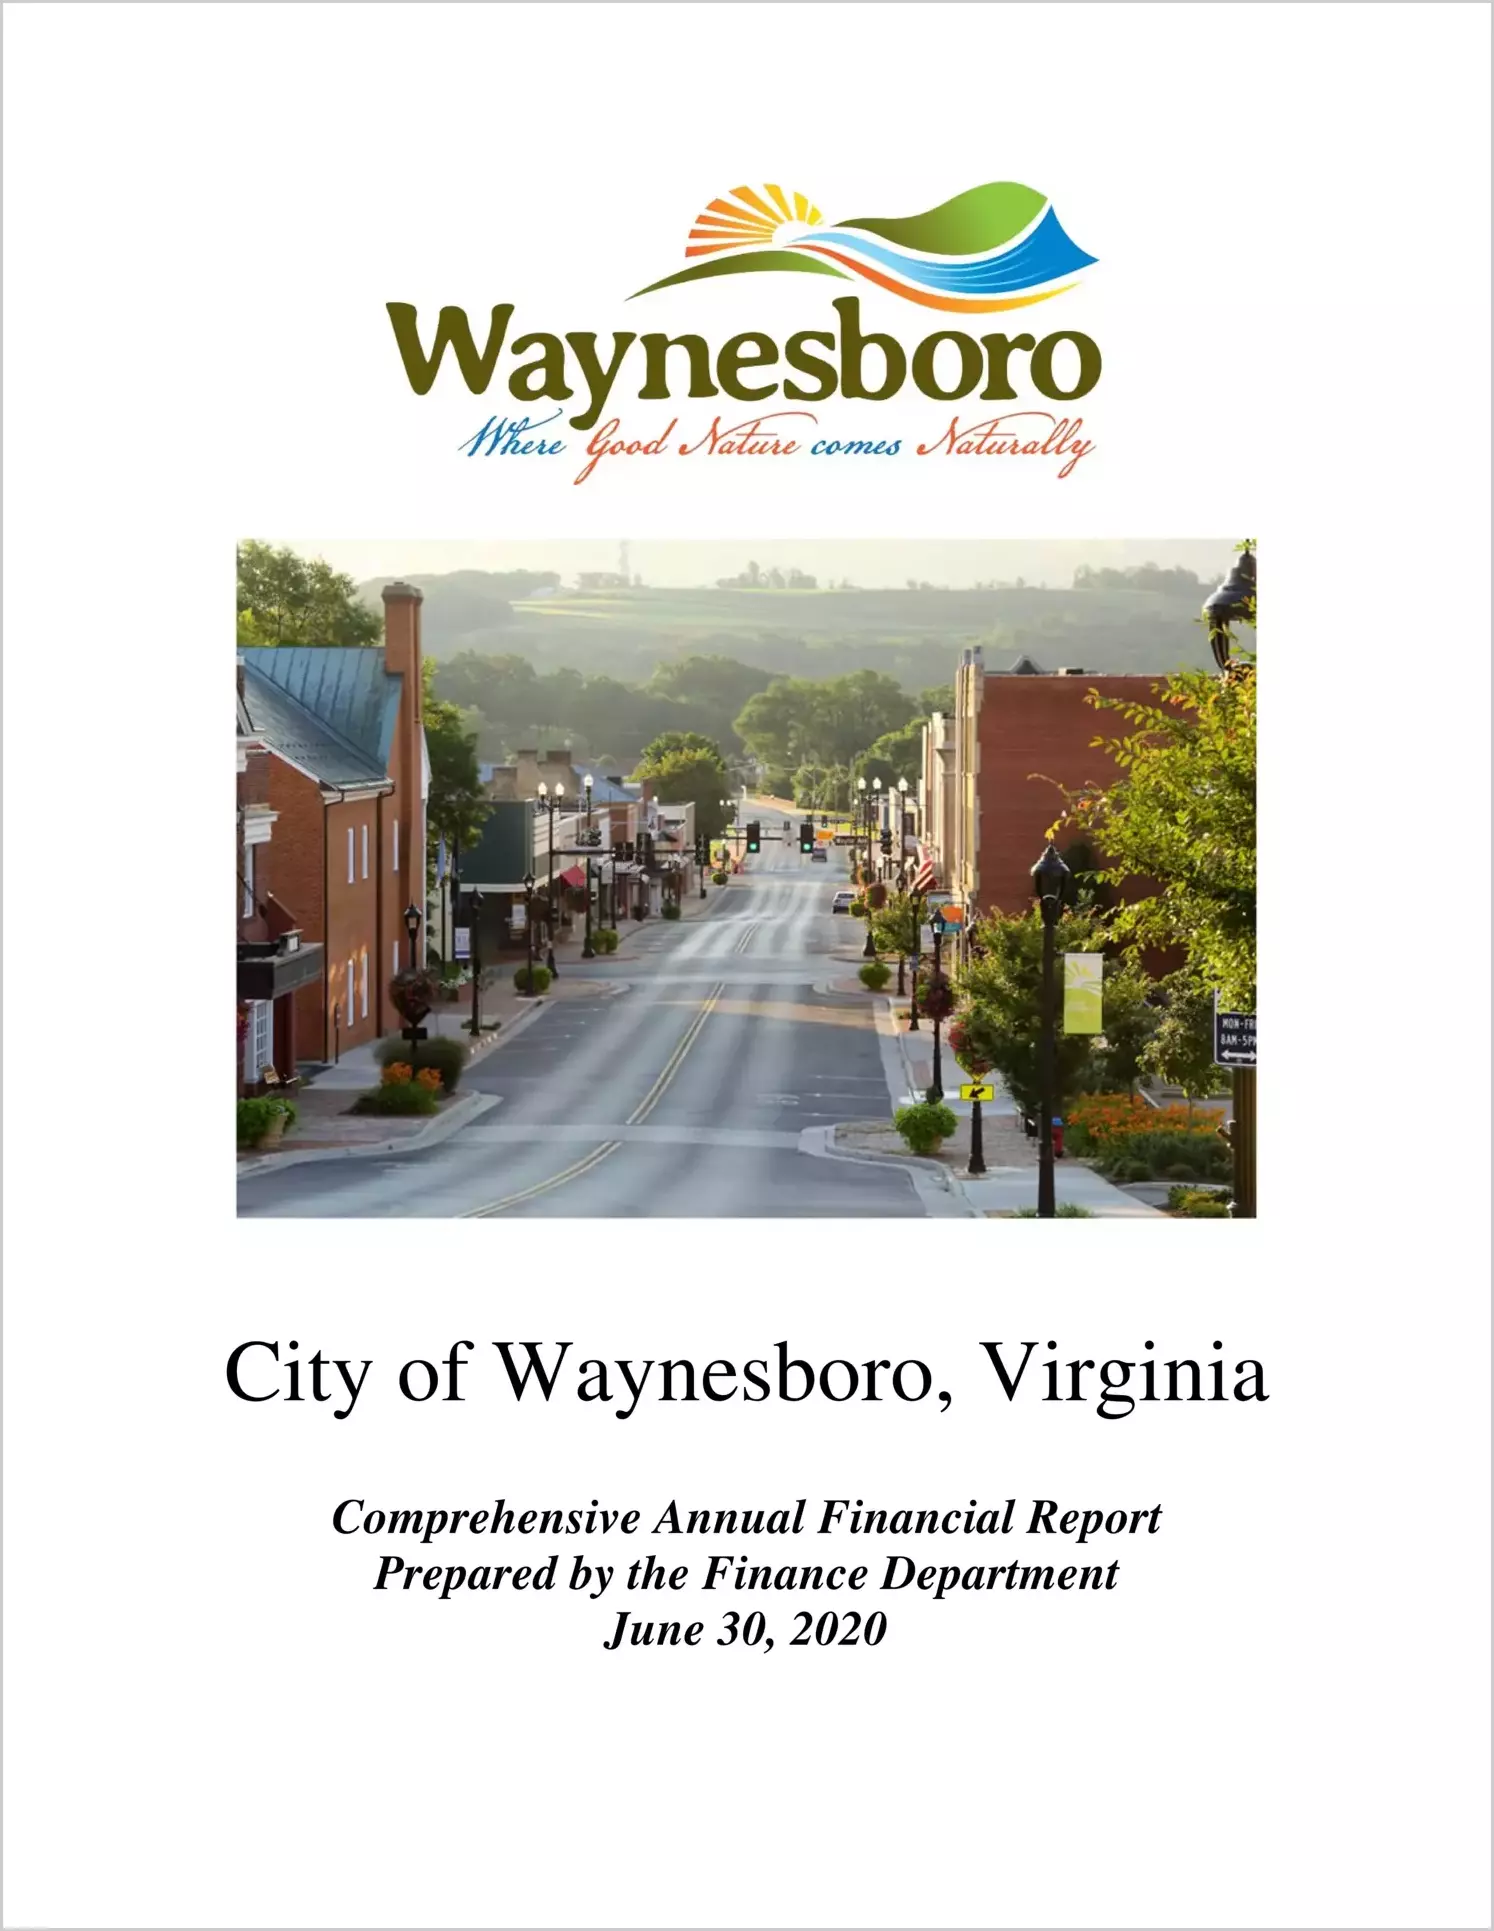 2020 Annual Financial Report for City of Waynesboro